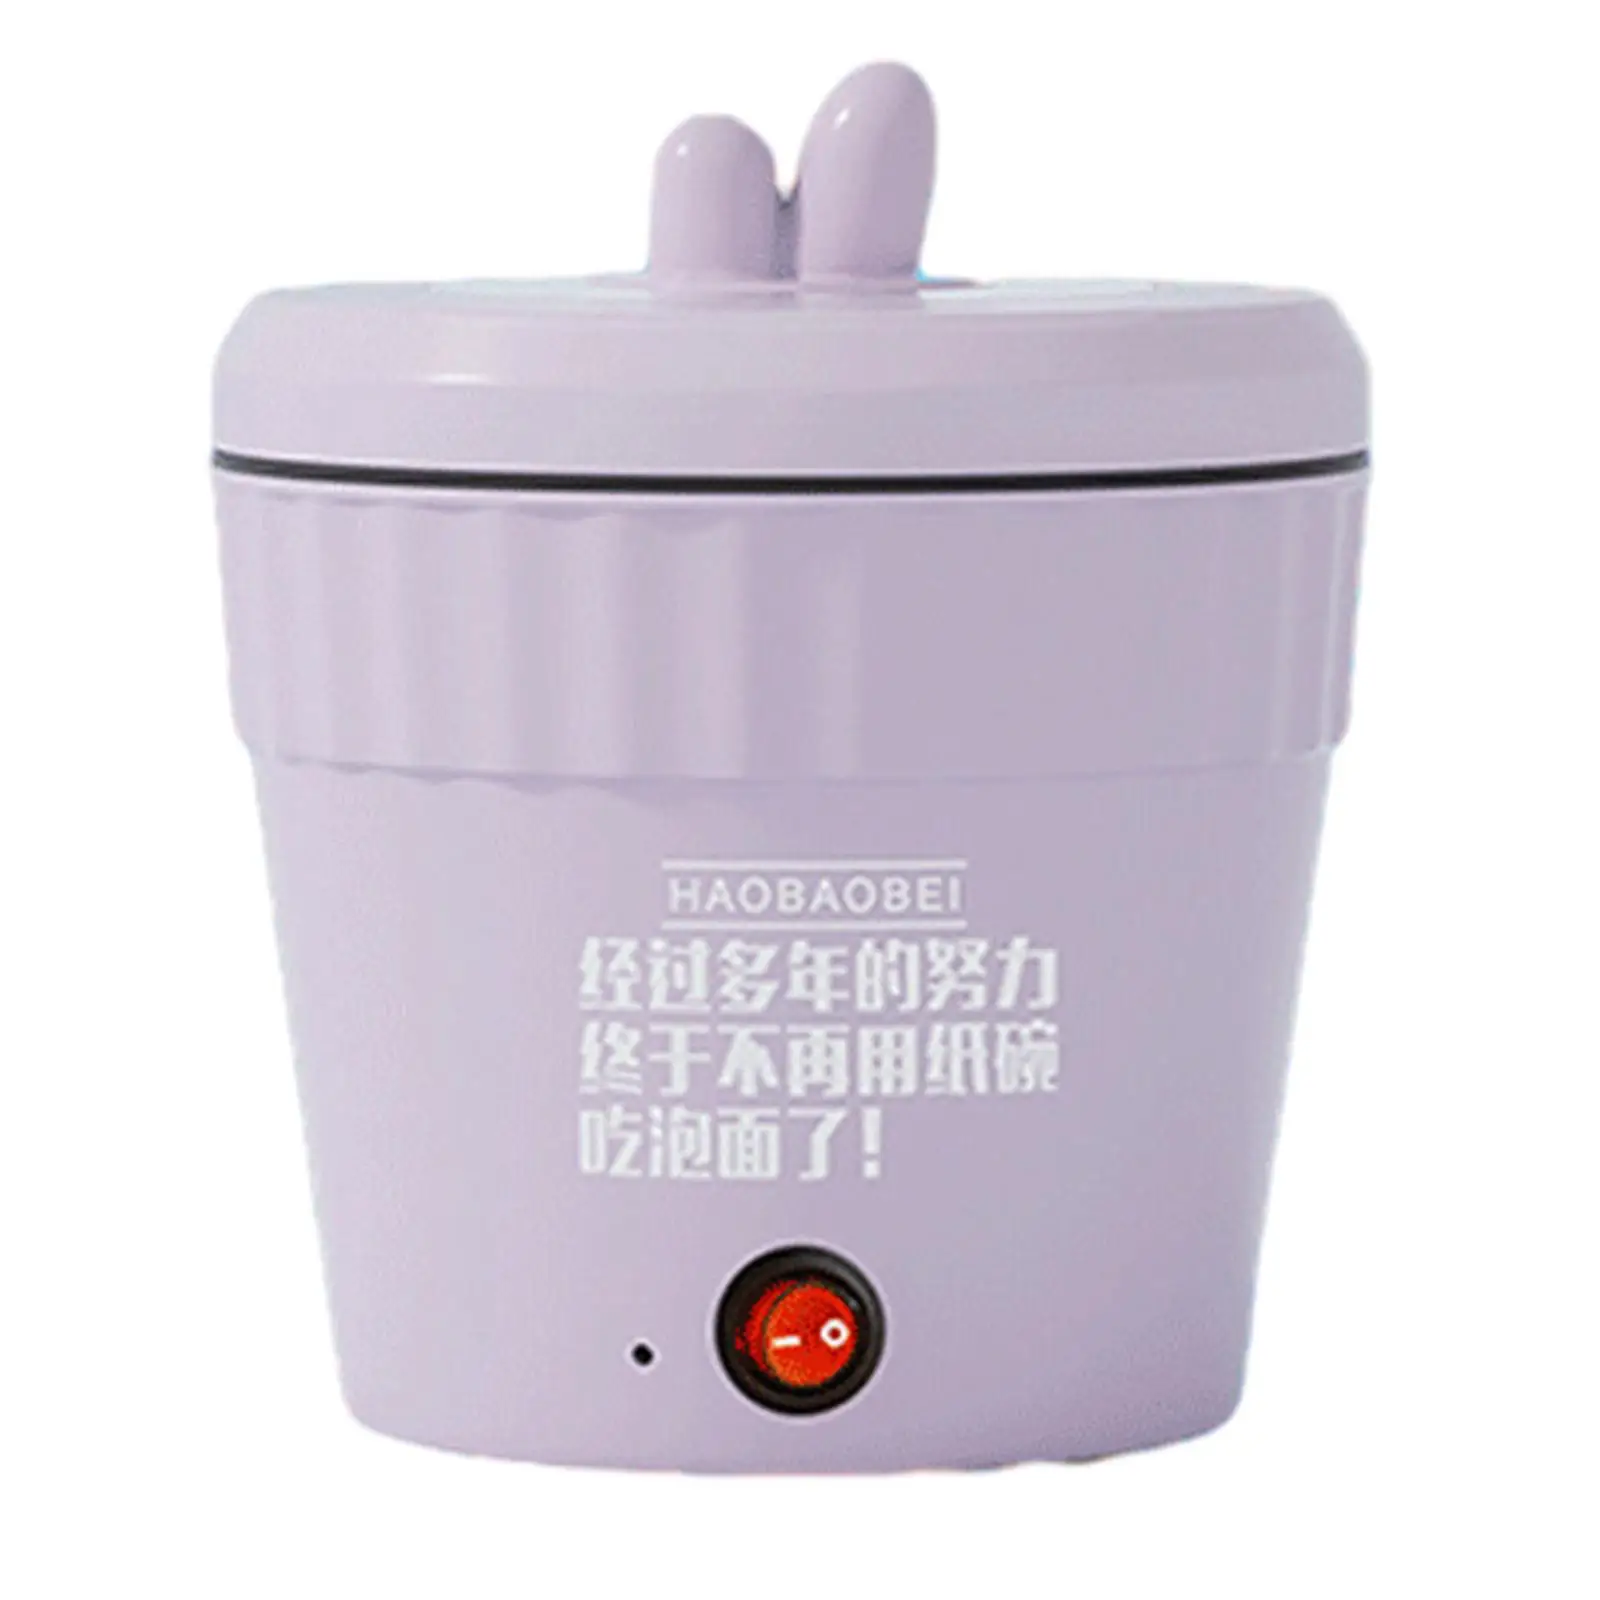 Electric Hot Pot Nonstick Phone Holder Design Double Layer Heat Insulation Cooking Pot for Fried Rice Steak Soup Dumplings